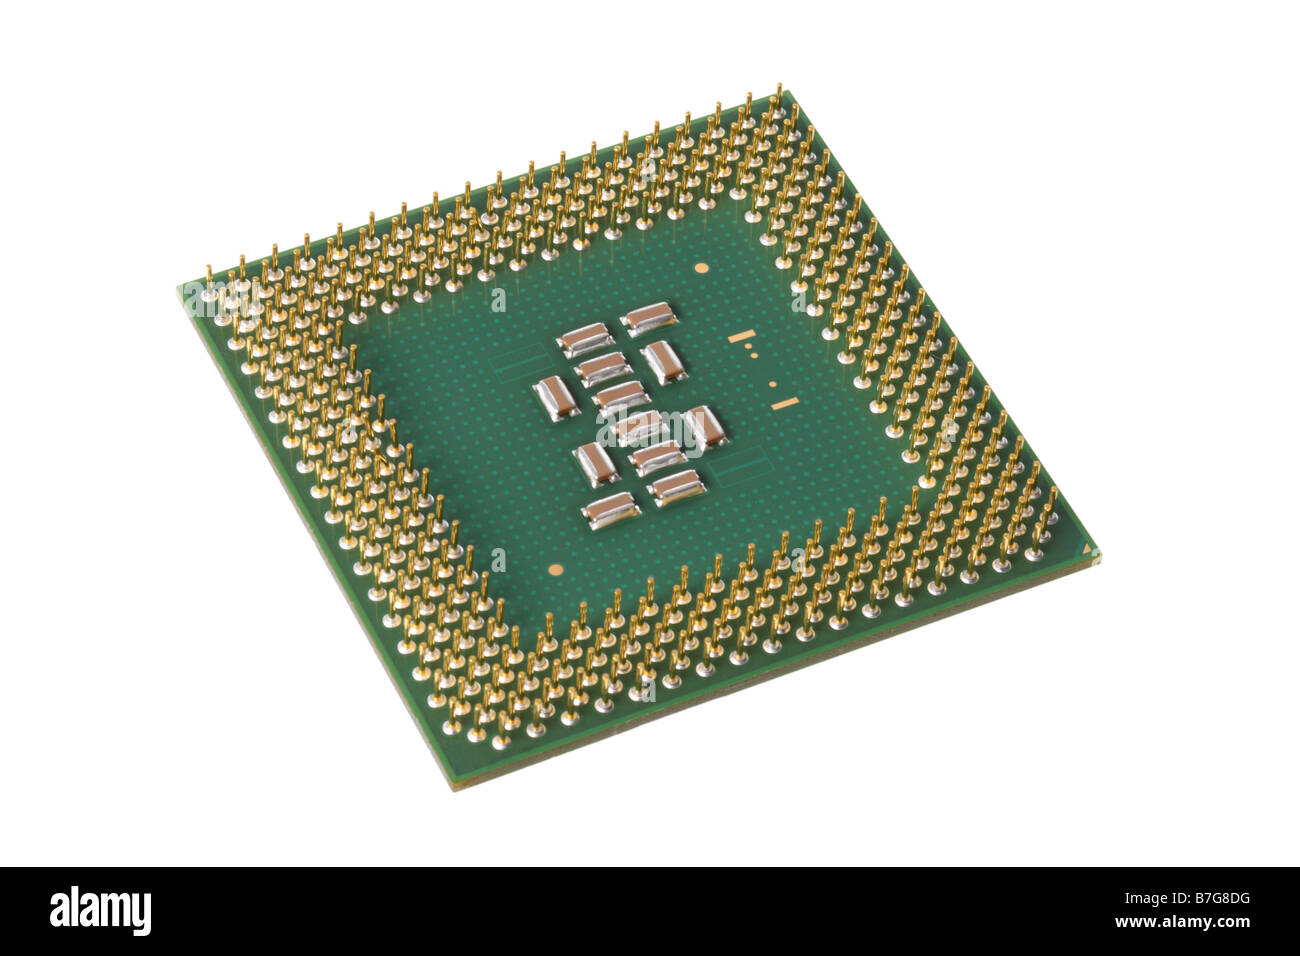 Procesador CPU micorchip recortadas sobre fondo blanco. Foto de stock